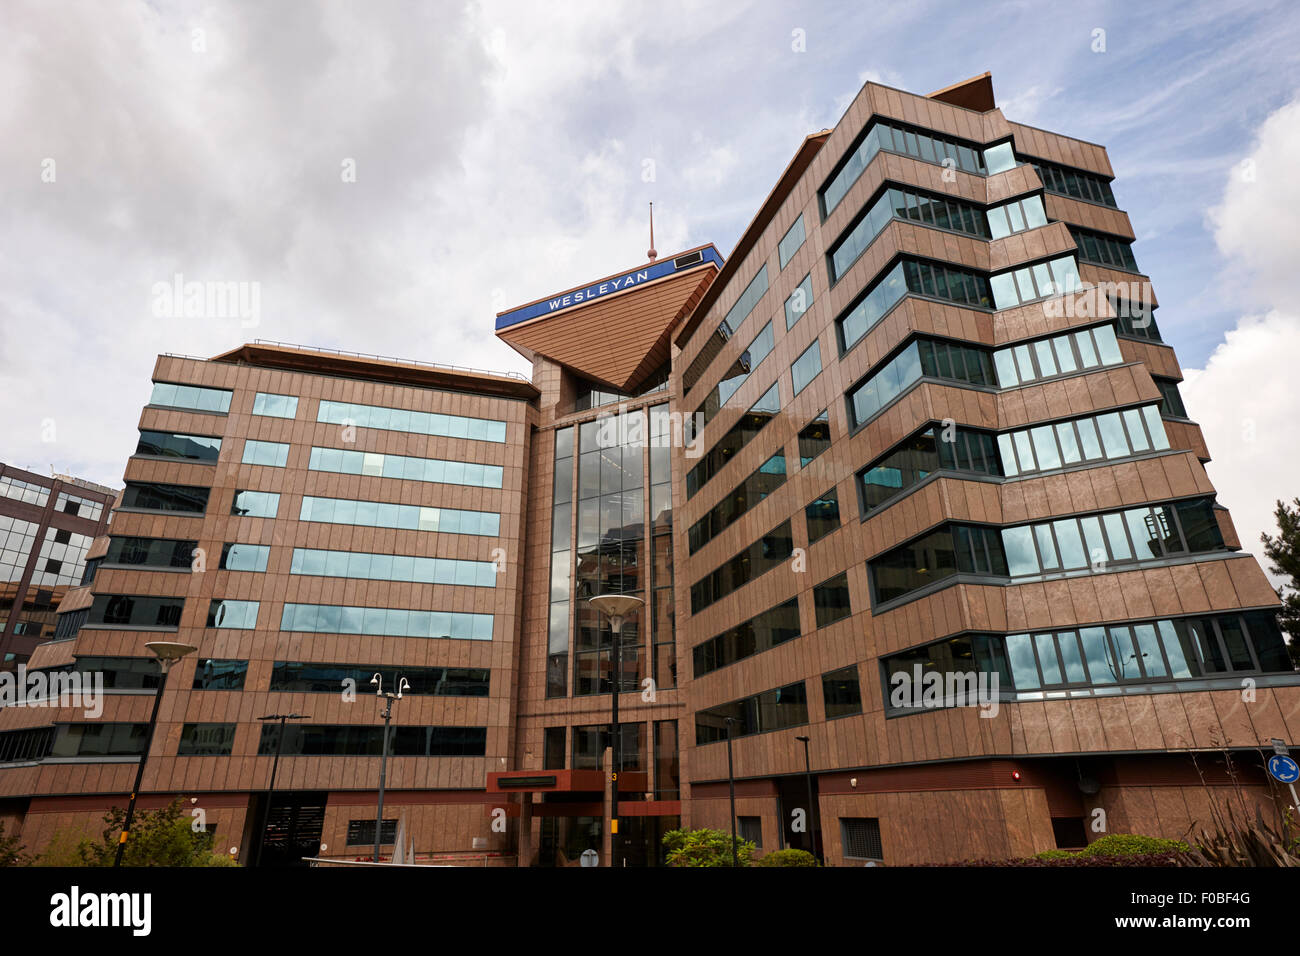 the wesleyan building in new financial district of Birmingham UK Stock Photo